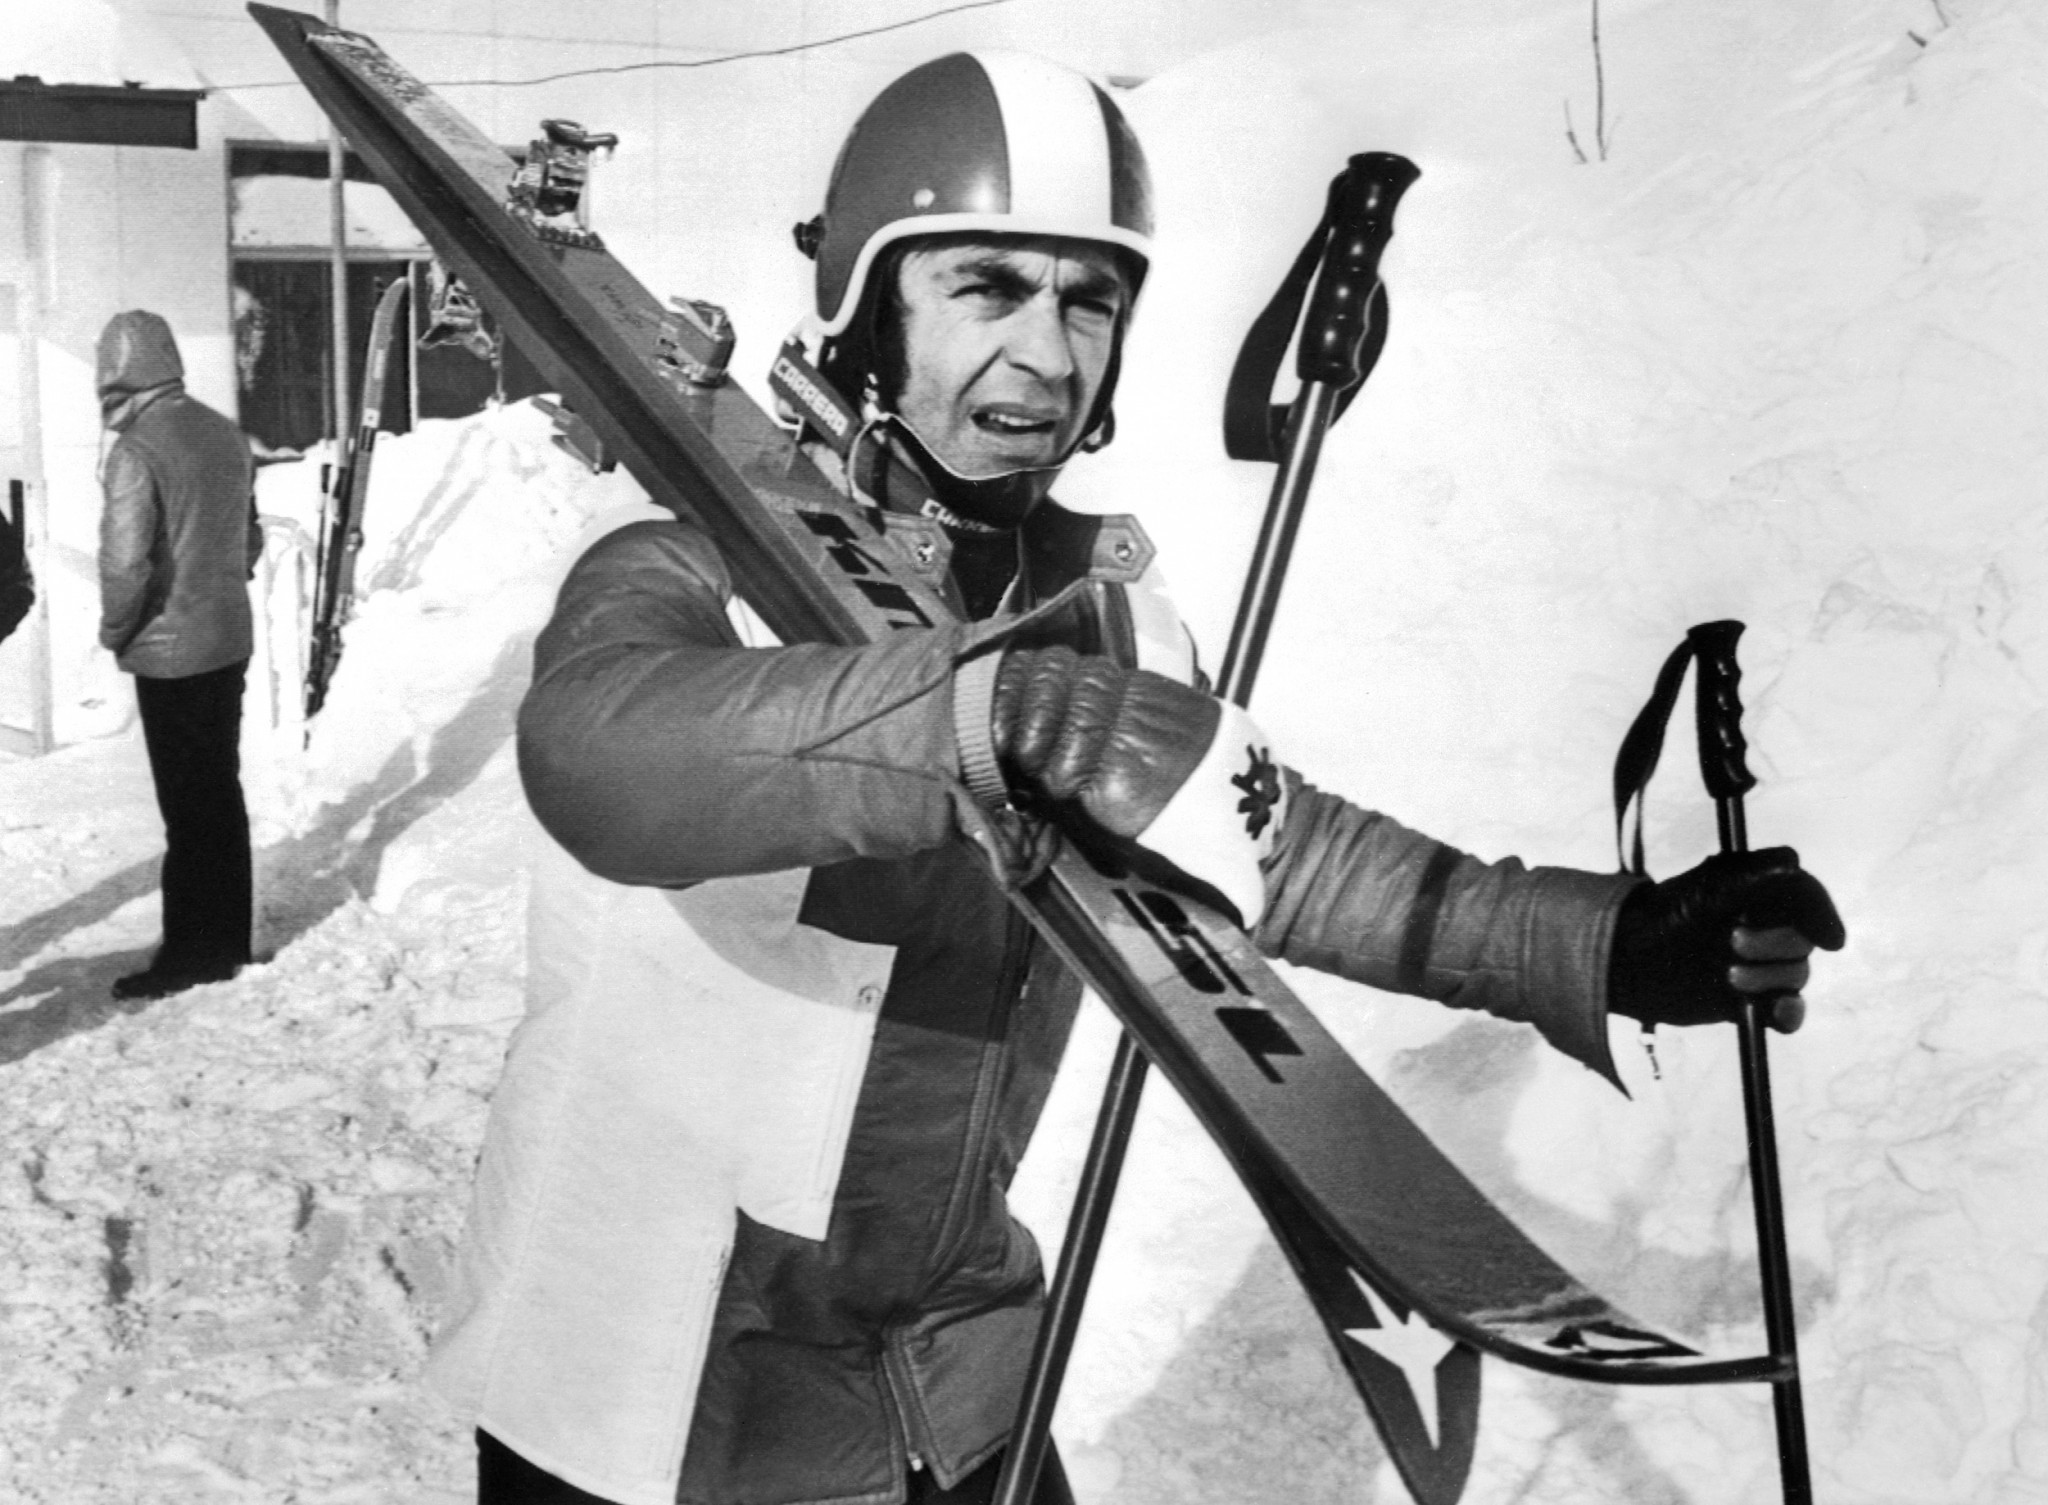 Karl Schranz was arguably Alpine skiing's biggest star in 1972 ©Getty Images